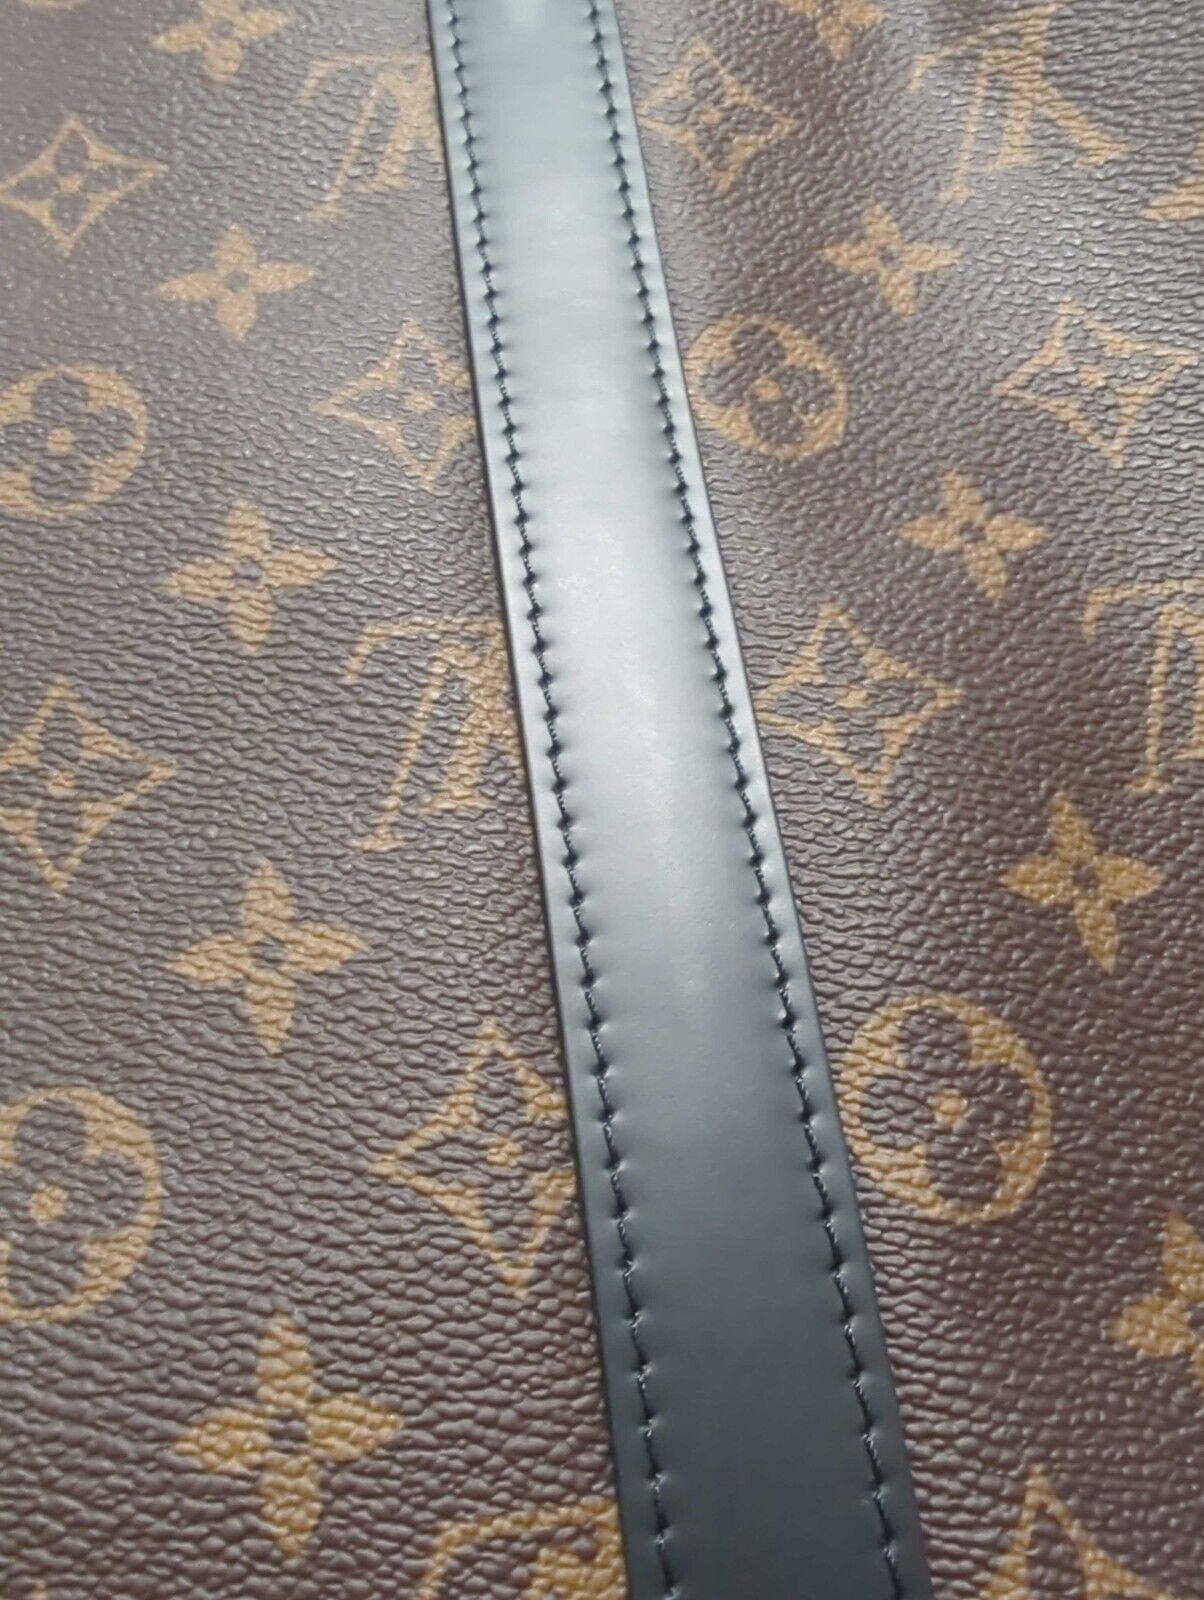 Louis Vuitton Monogram Macassar Keepall Bandouliere 45 M56711 Men  w/Accessories